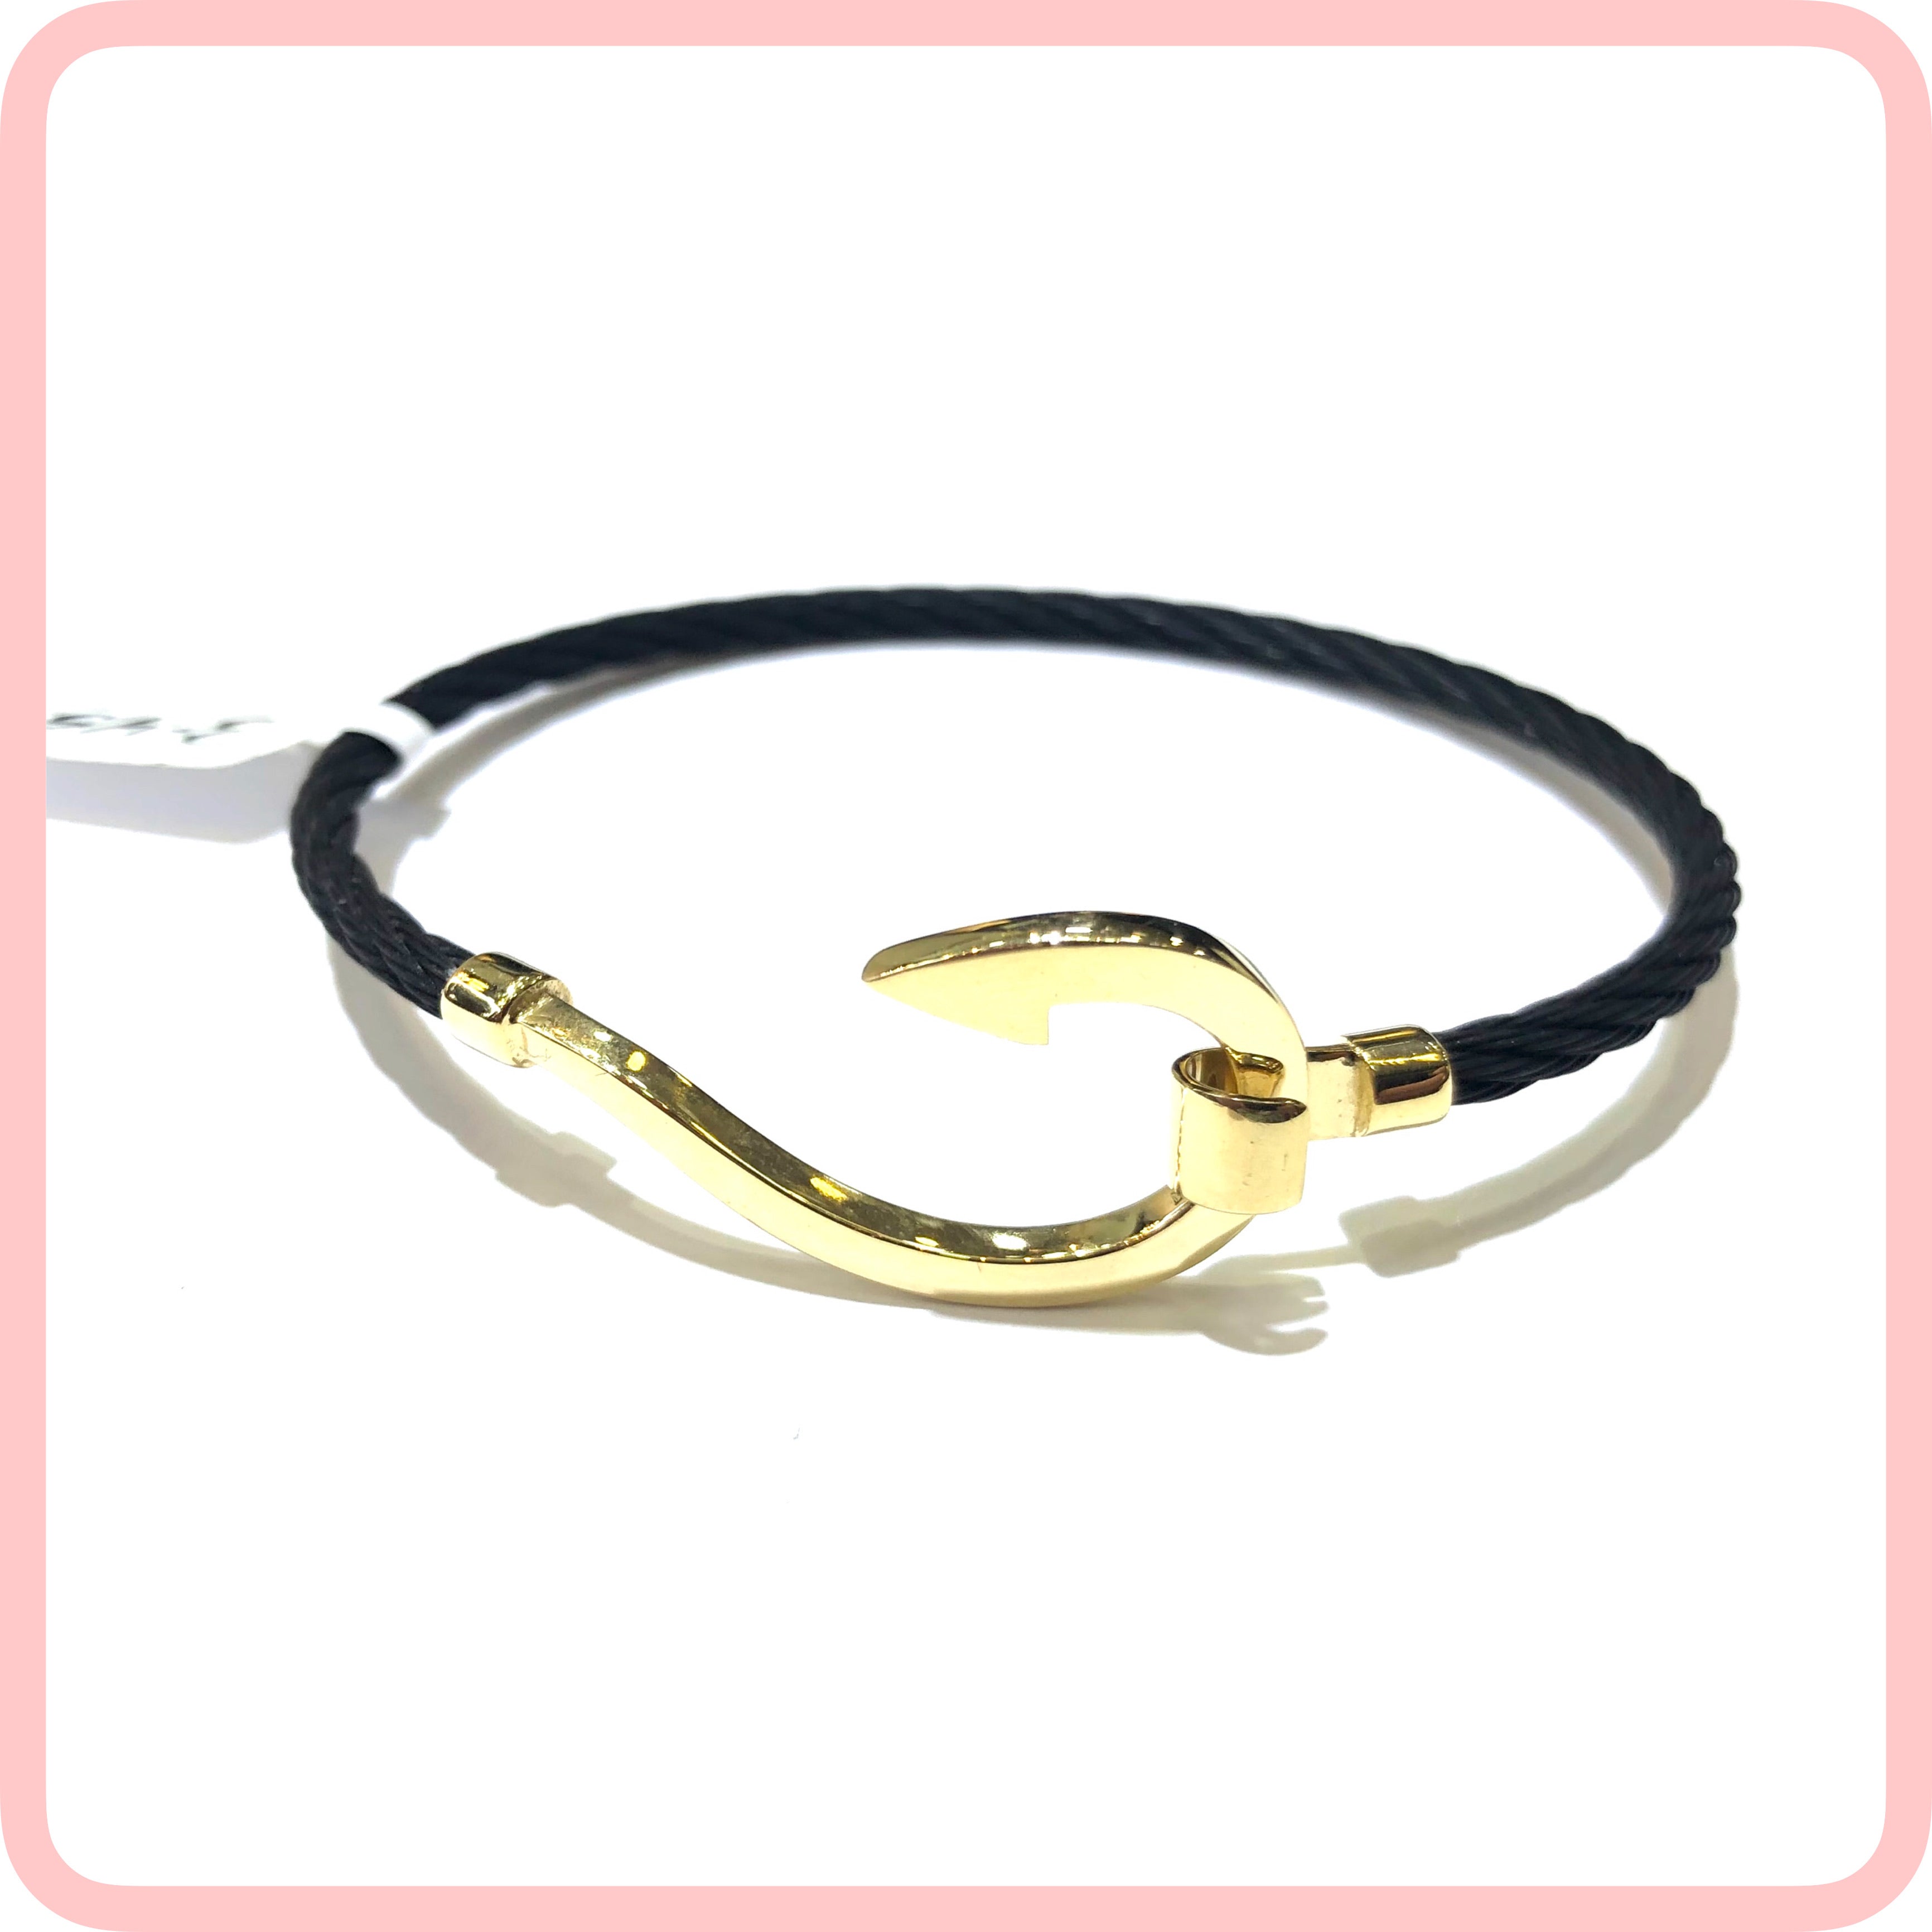 Sailor's Hook Men's Bracelet